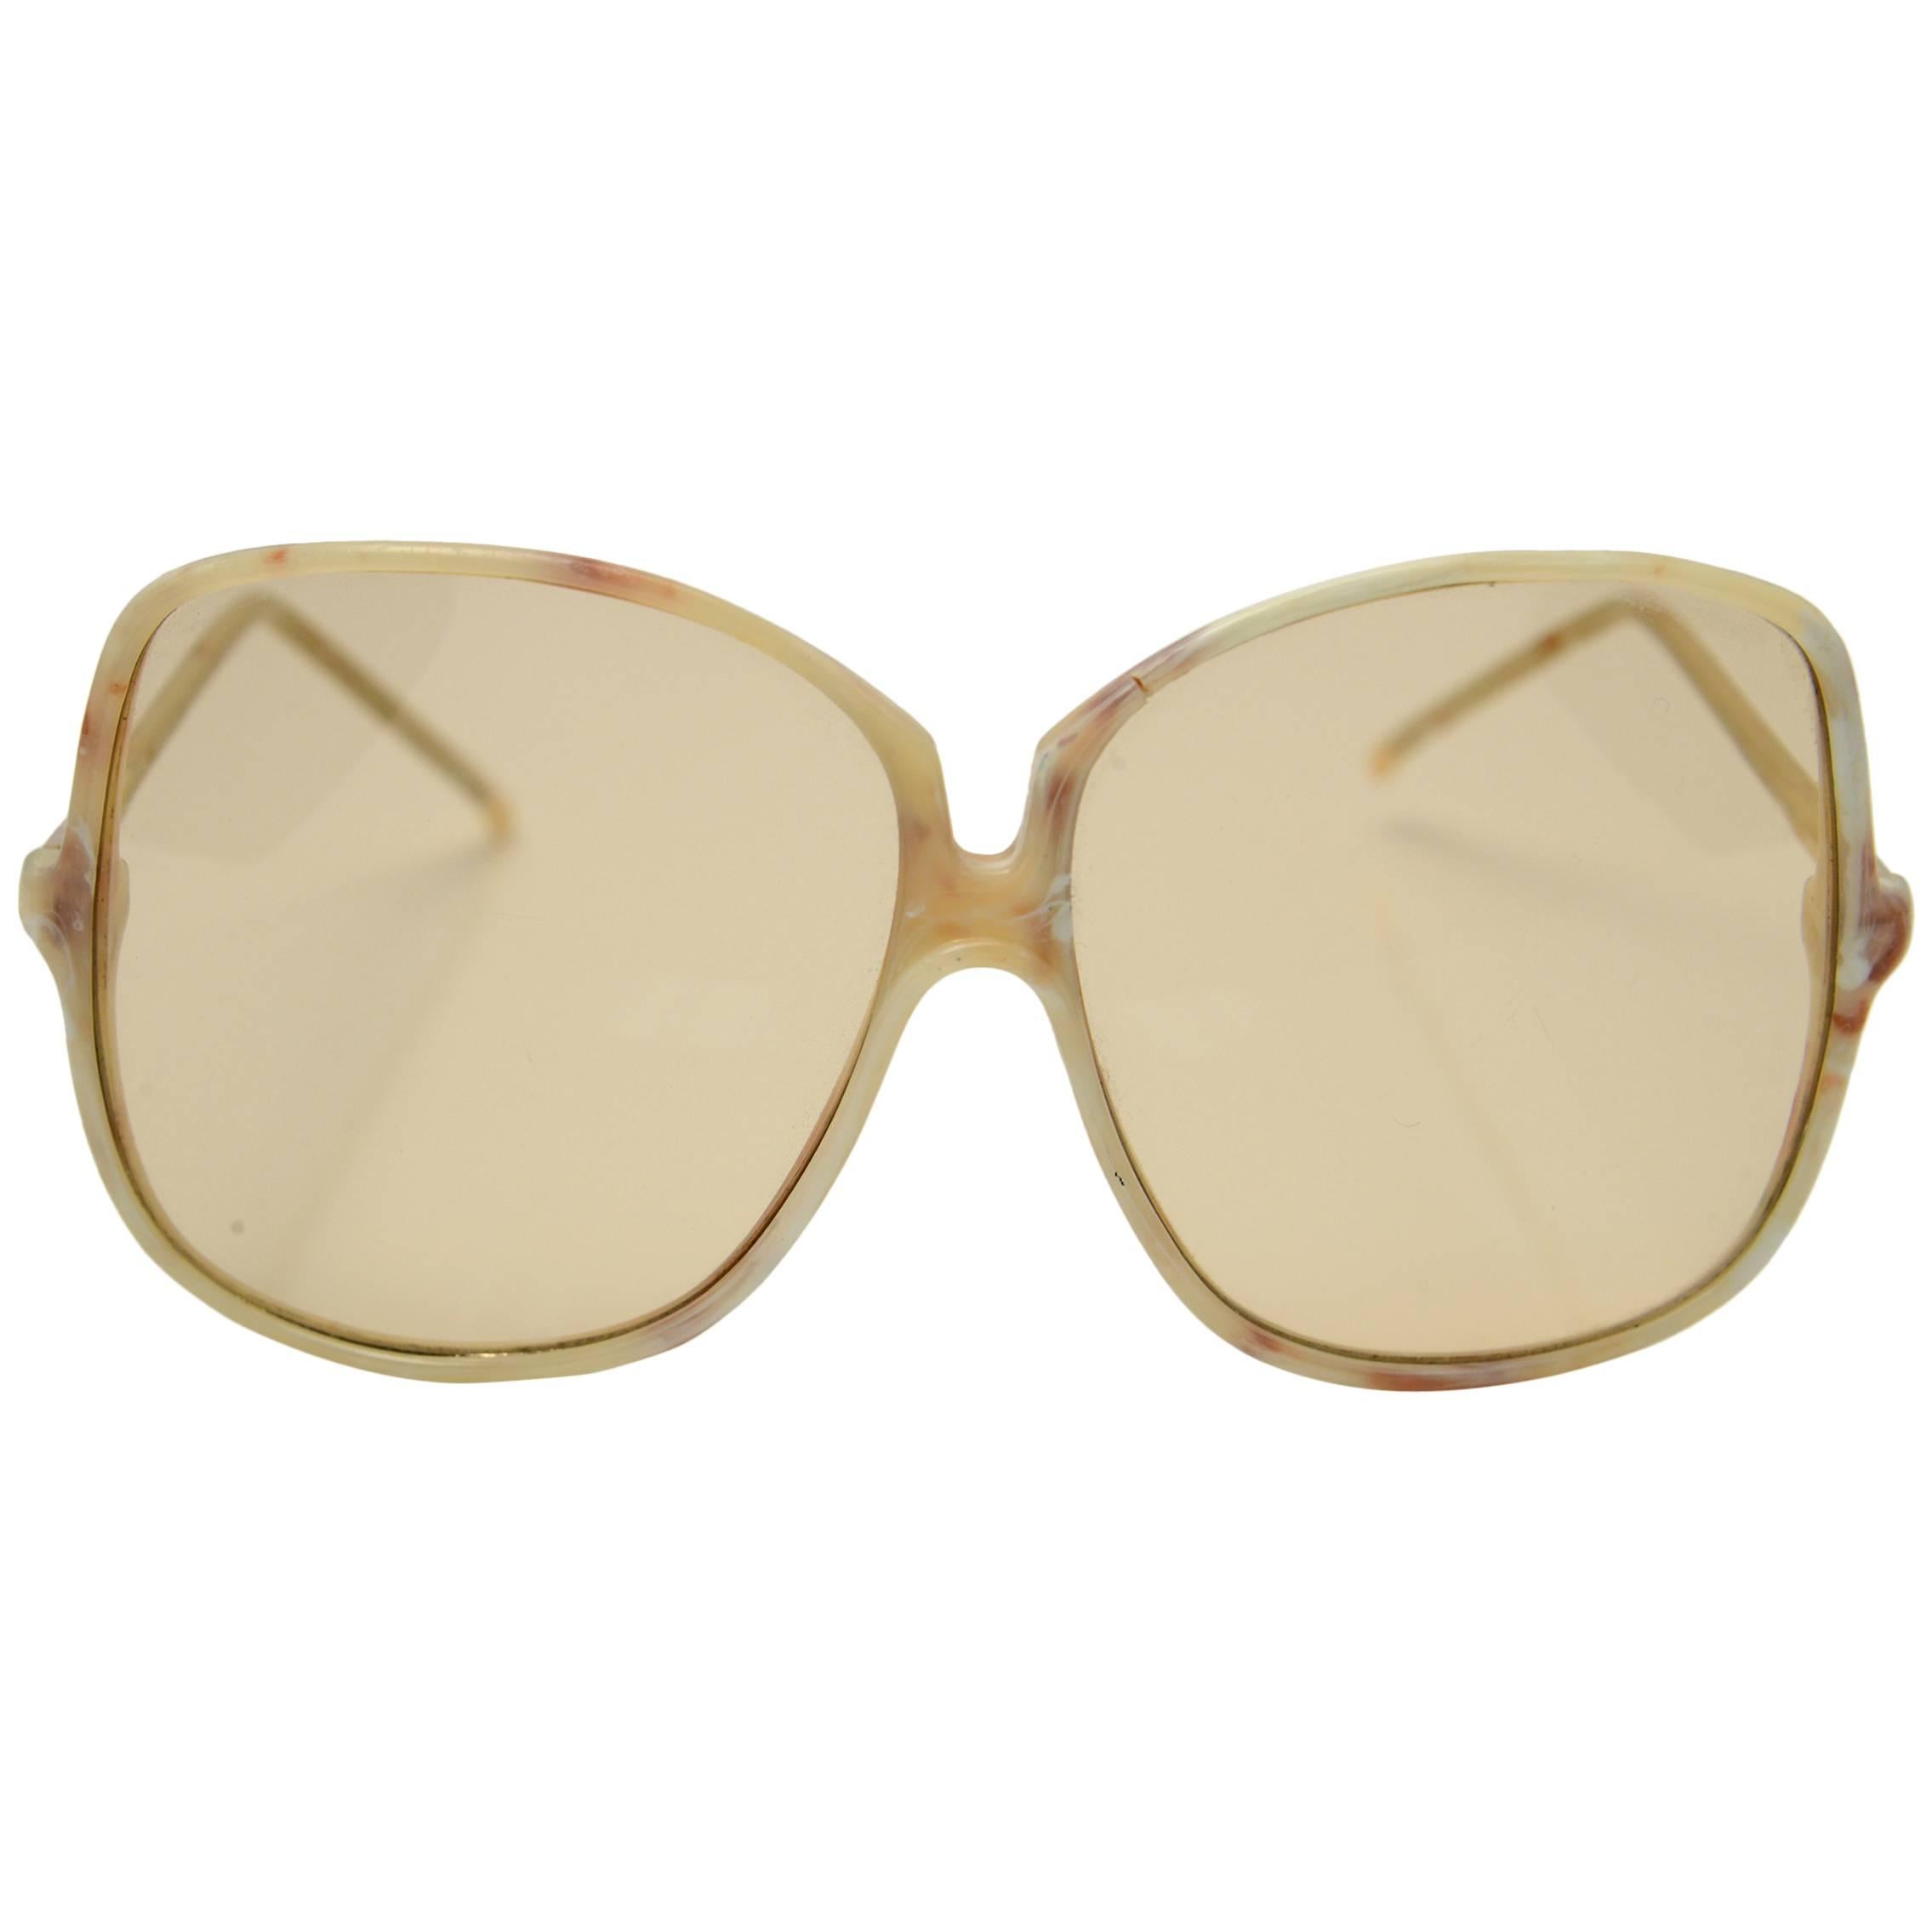 1970s Italian Piave Marbled Cream Colored Sunglasses